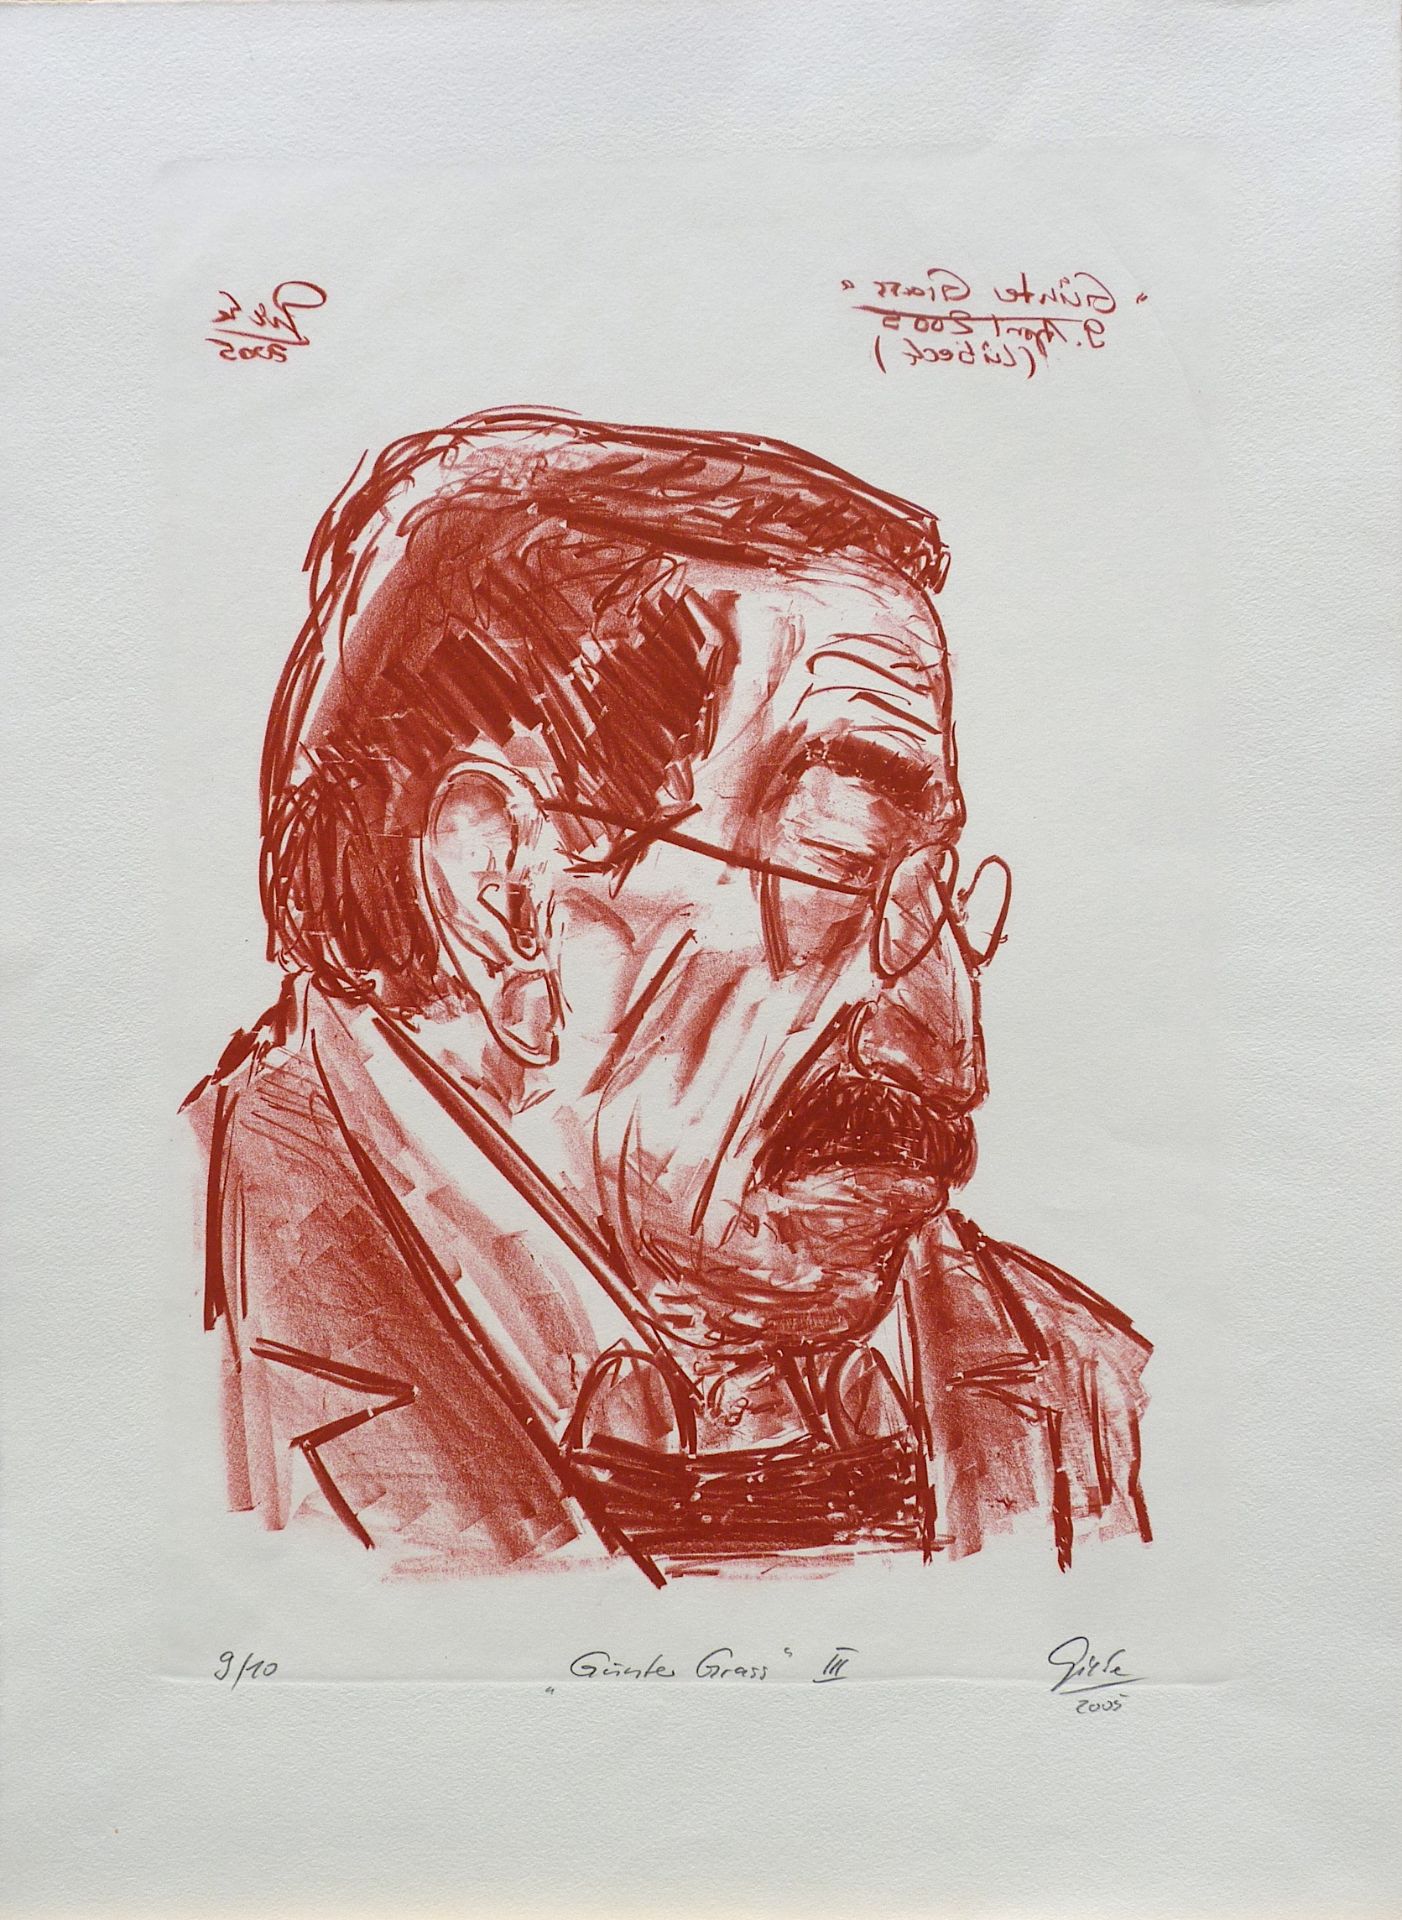 GIEBE, HUBERTUS: "Günter Grass" III, 2005 - Image 2 of 2